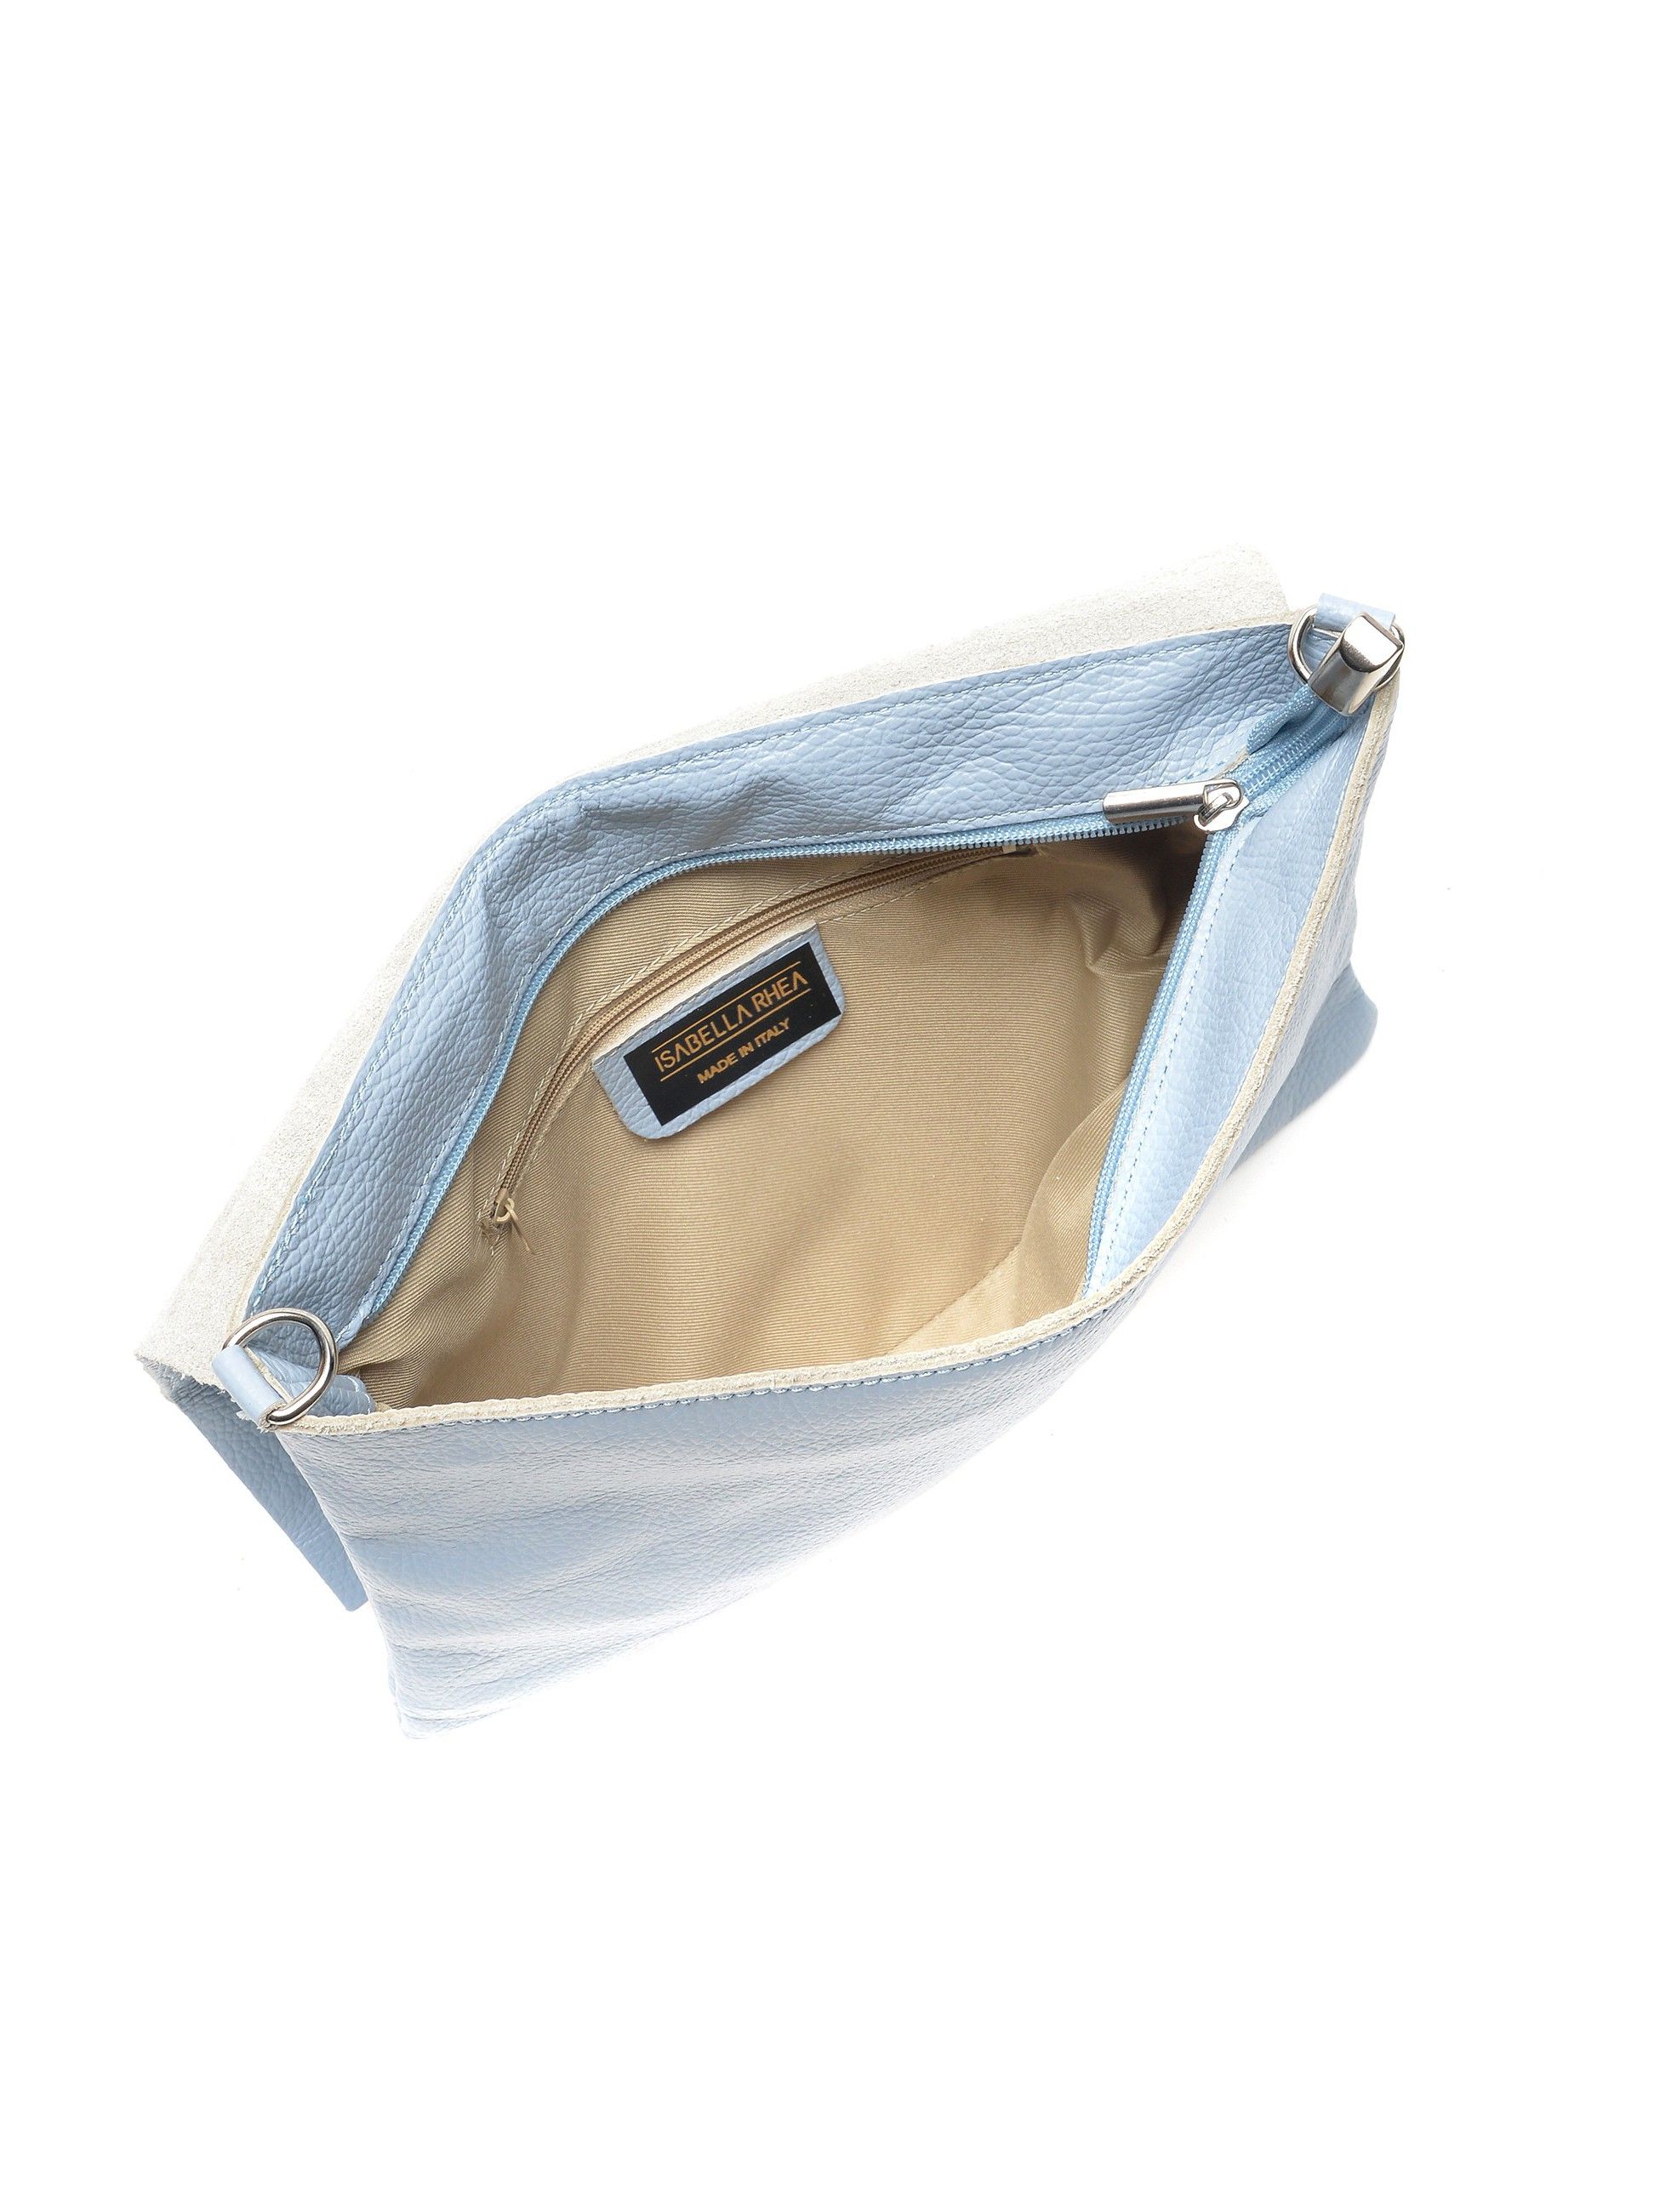 Shoulder Bag
100% cow leather
Top zip closure
Inner zip pocket
Tassel detail
Dimensions (L): 22x30 x / cm
Handle: /
Shoulder strap: 120 cm adjustable